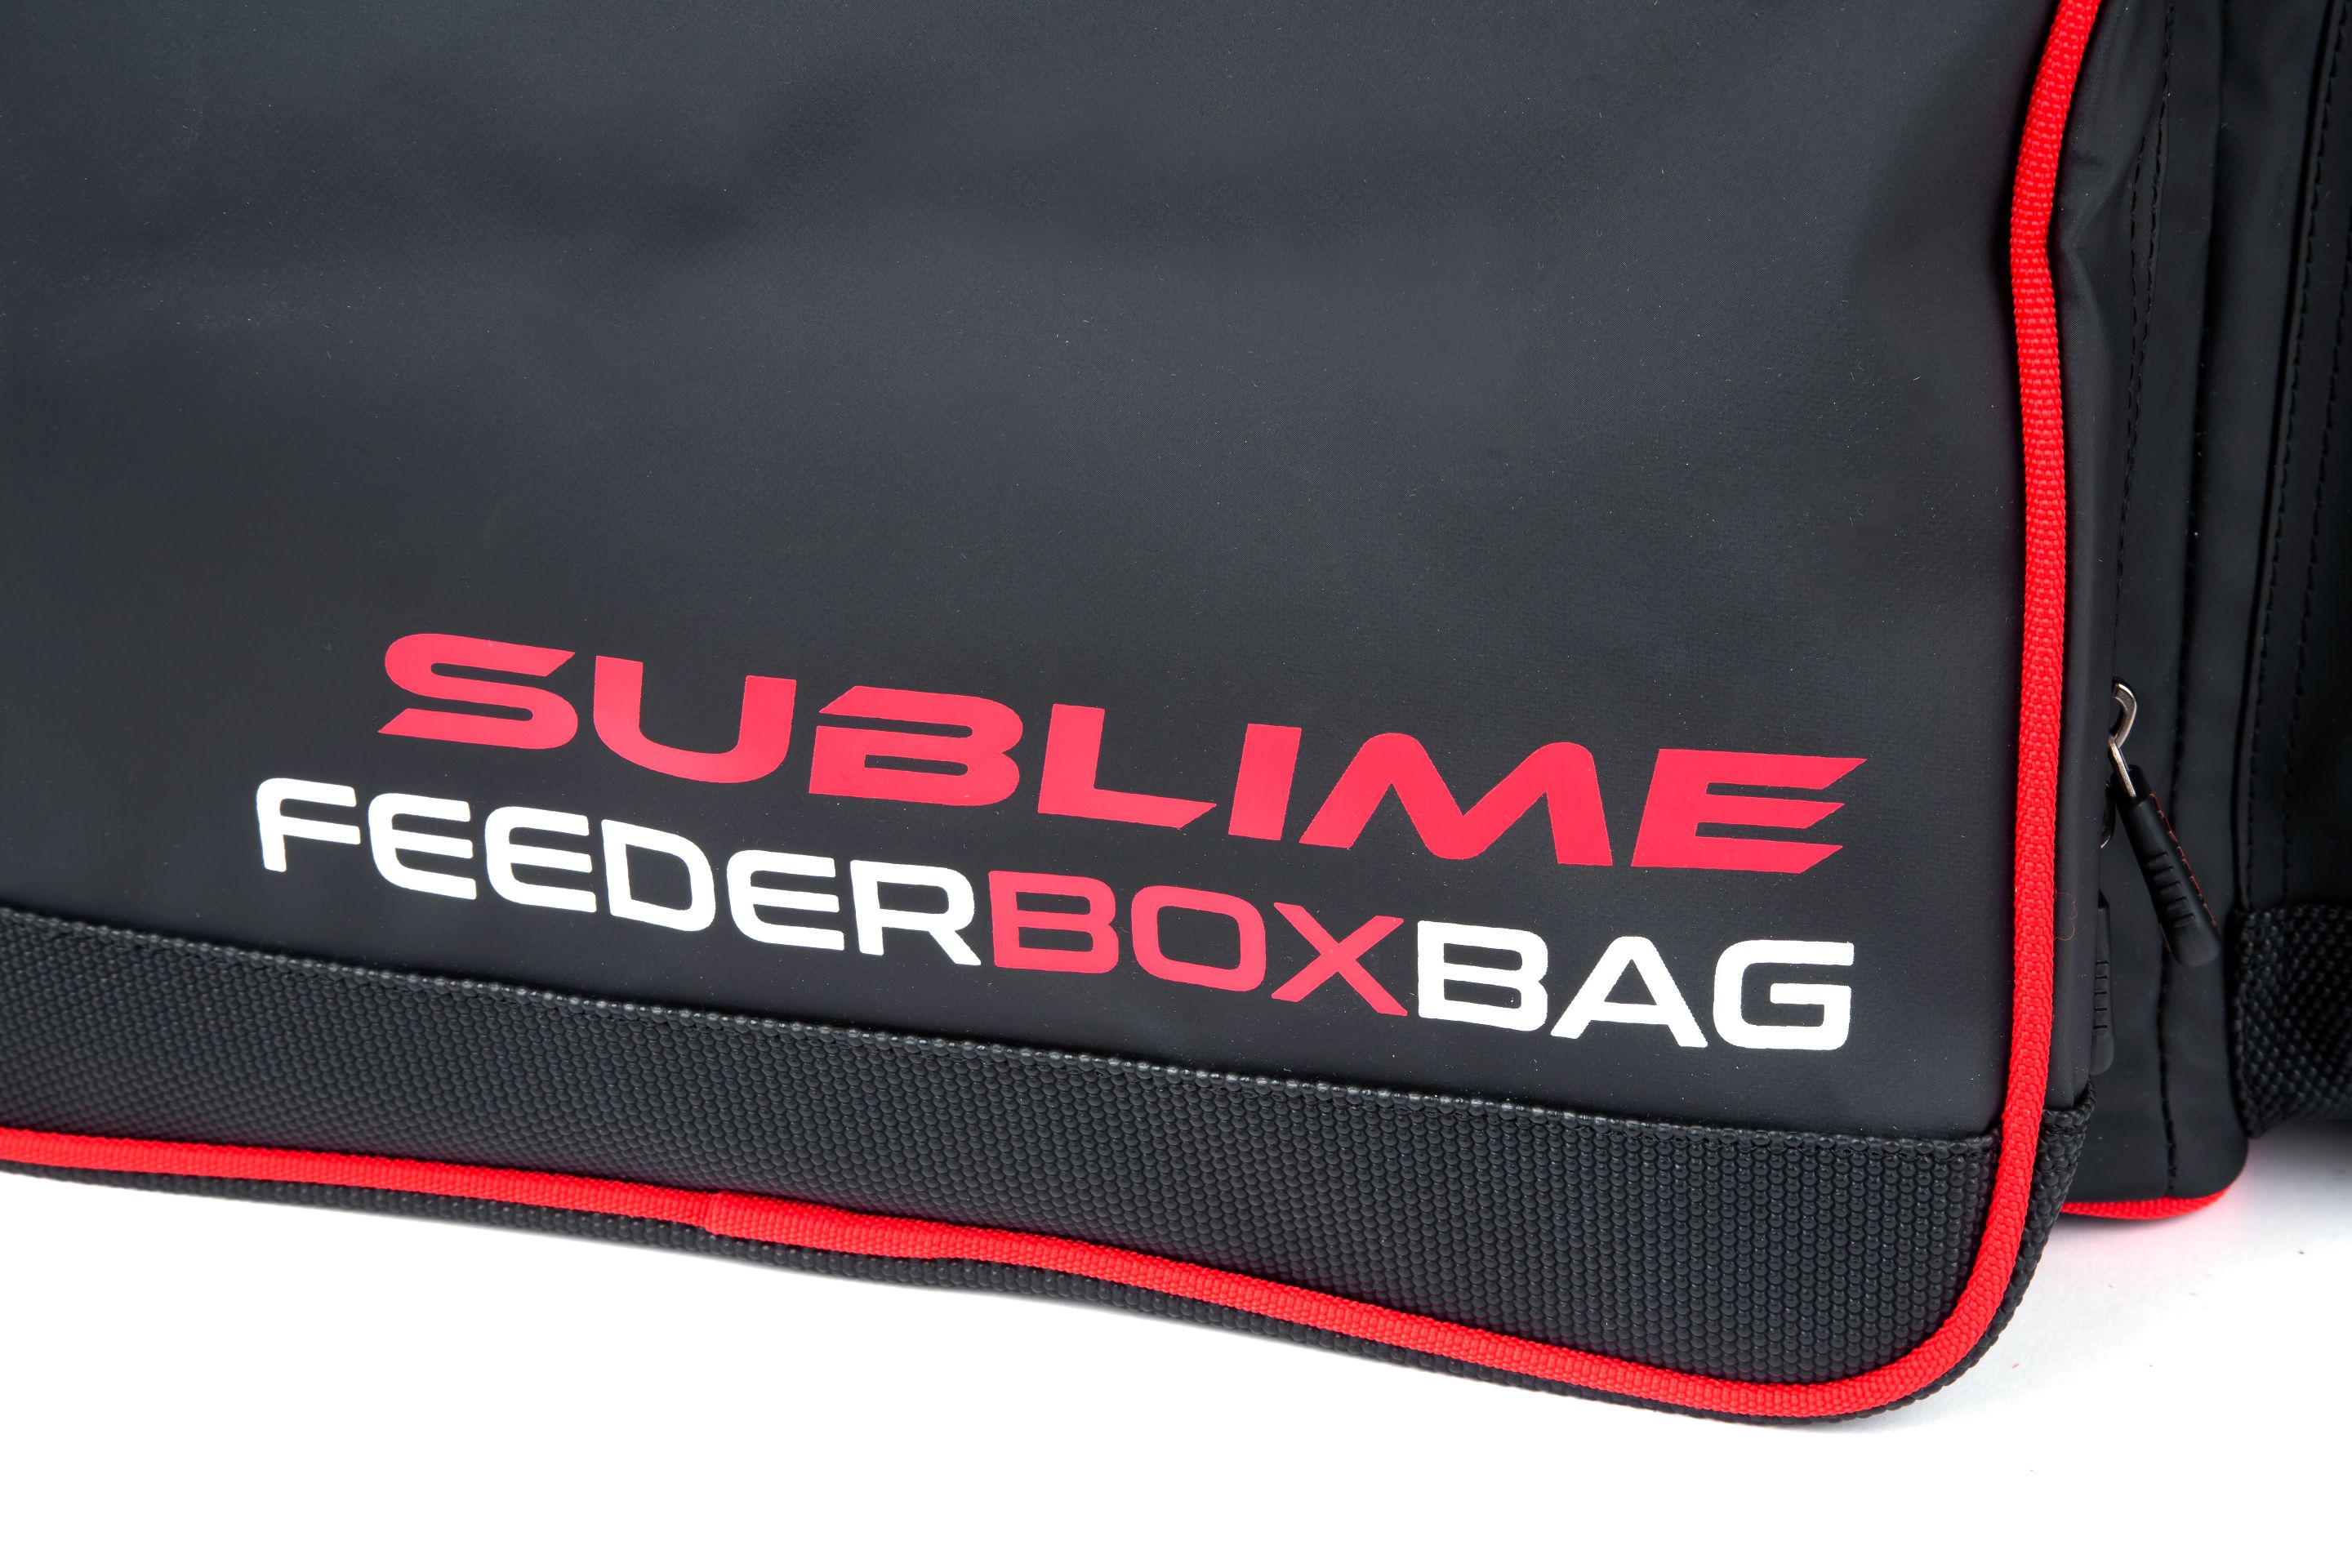 Sac Nytro Sublime Feeder Box Bag